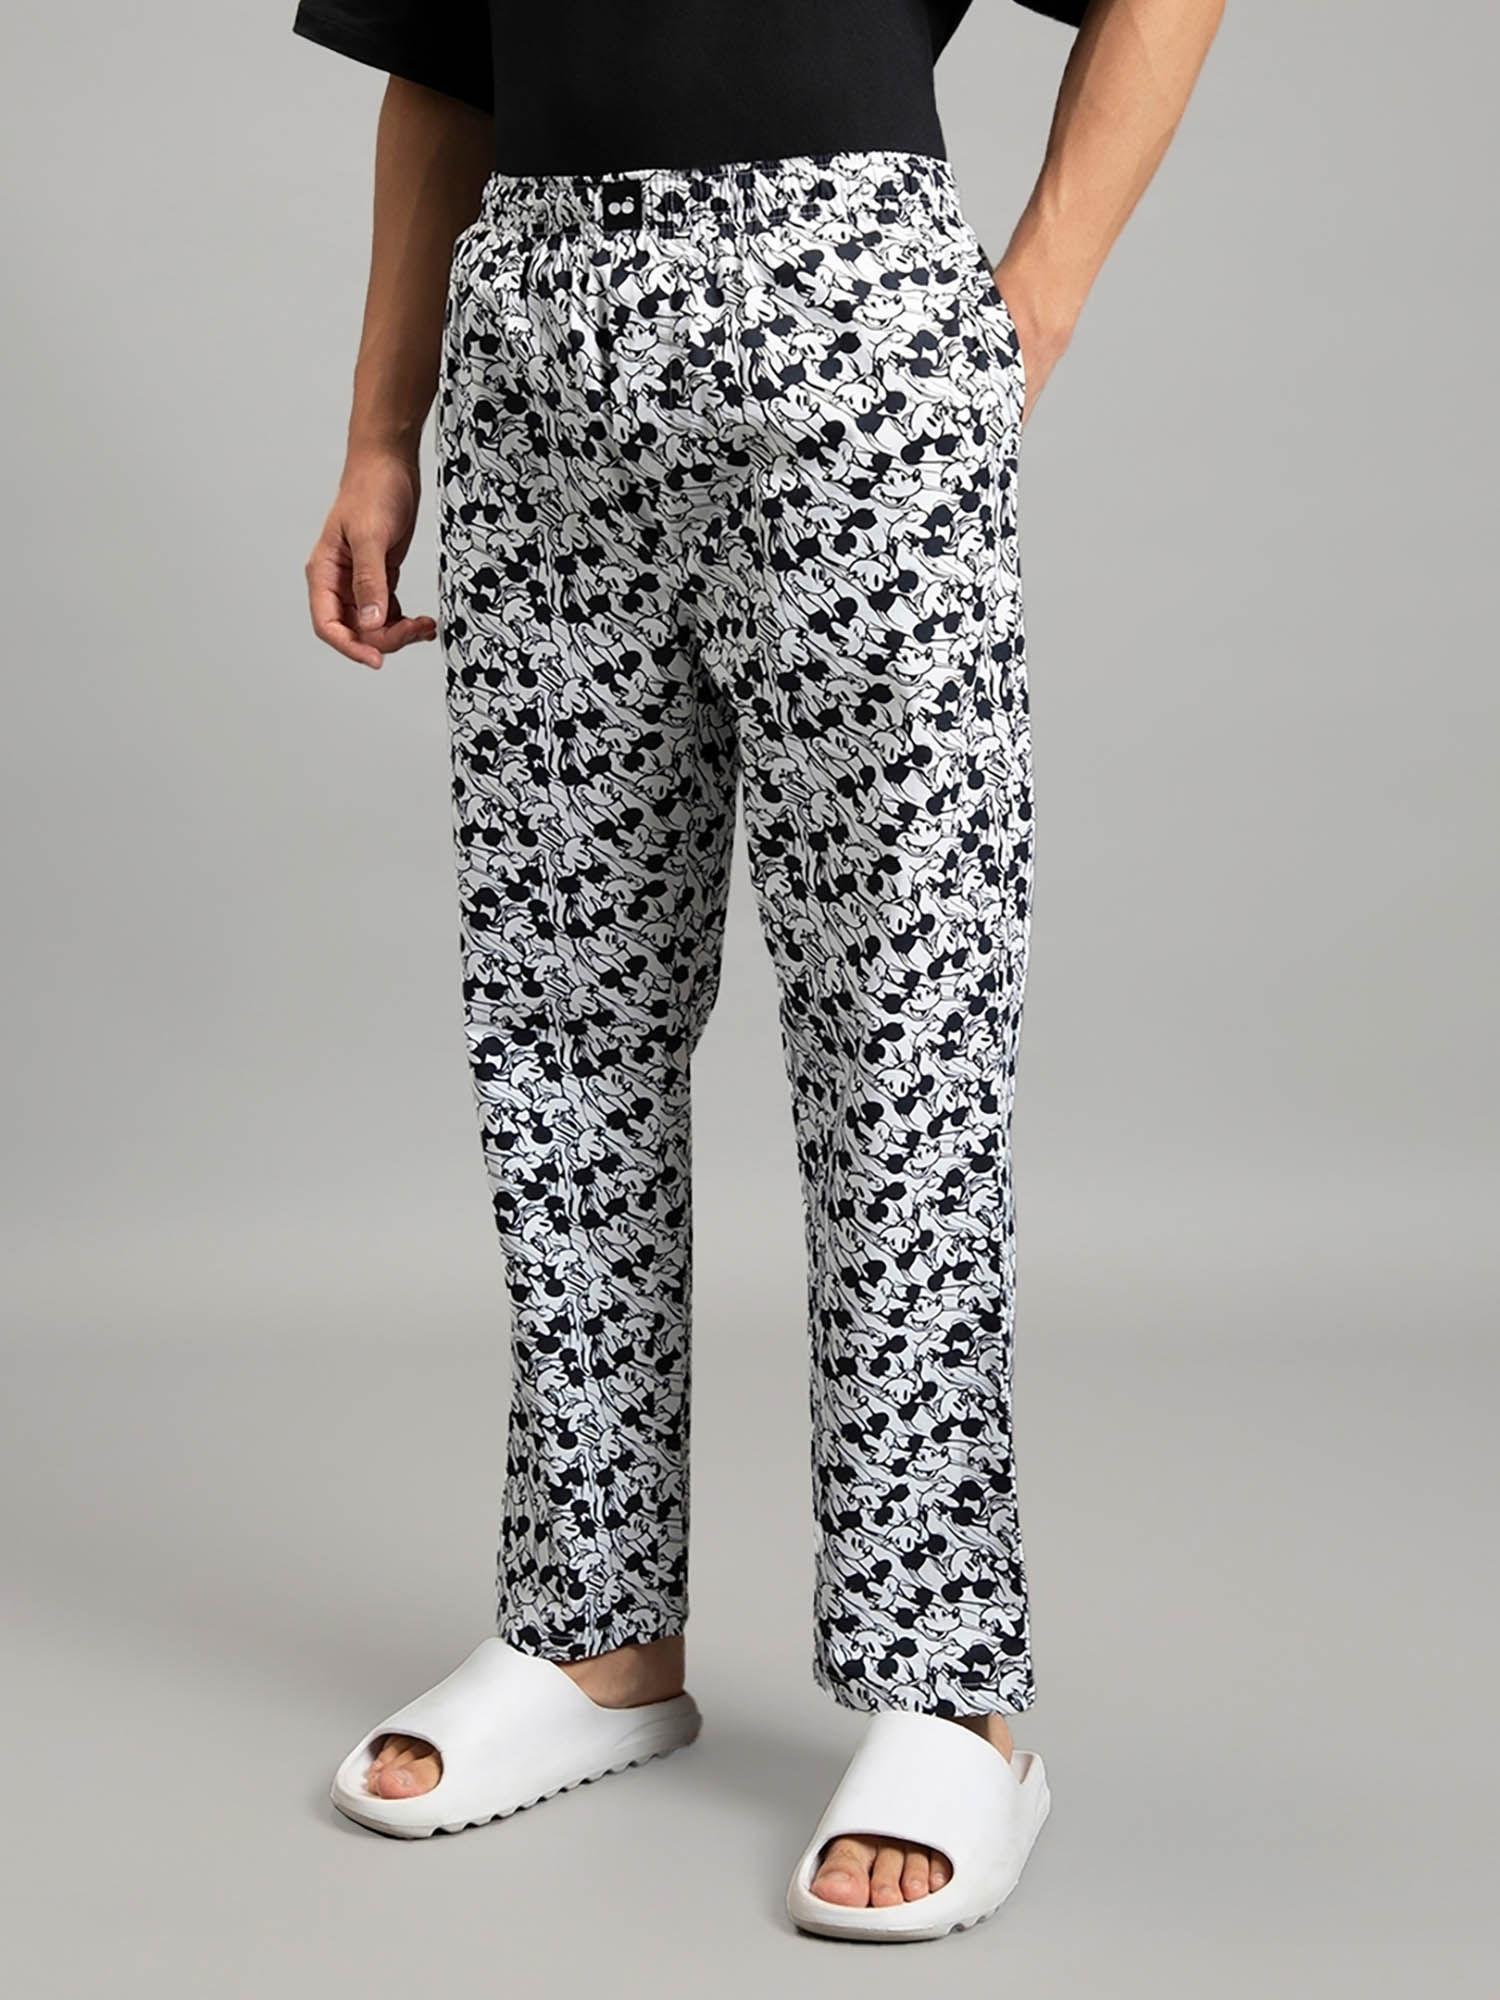 men's-white-all-over-printed-pyjamas